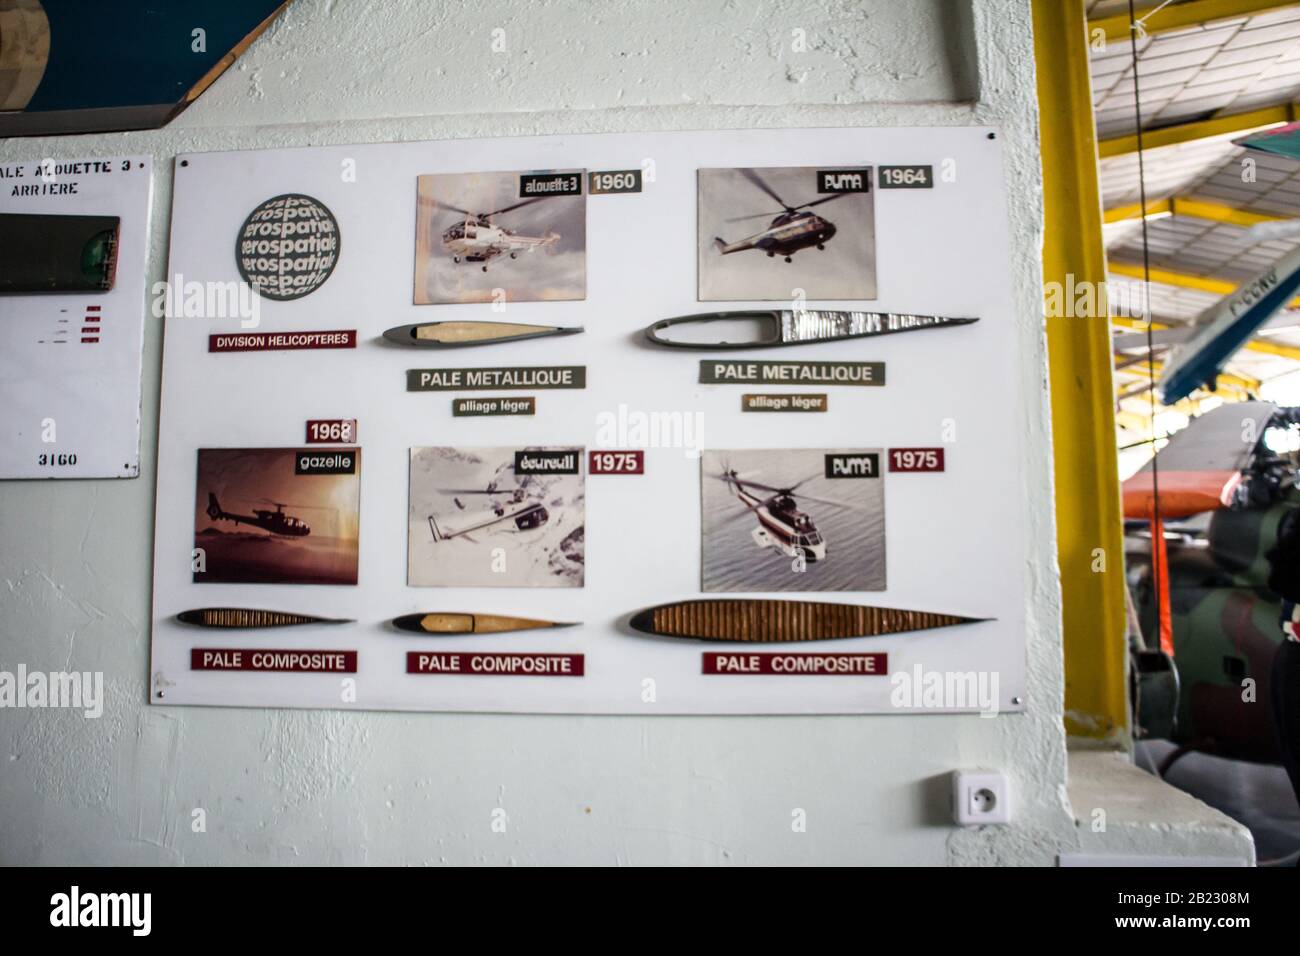 Musée de l'Aviation,Saint Victoret (13,France) : cross section of aerospatiale's helicopter blades Stock Photo